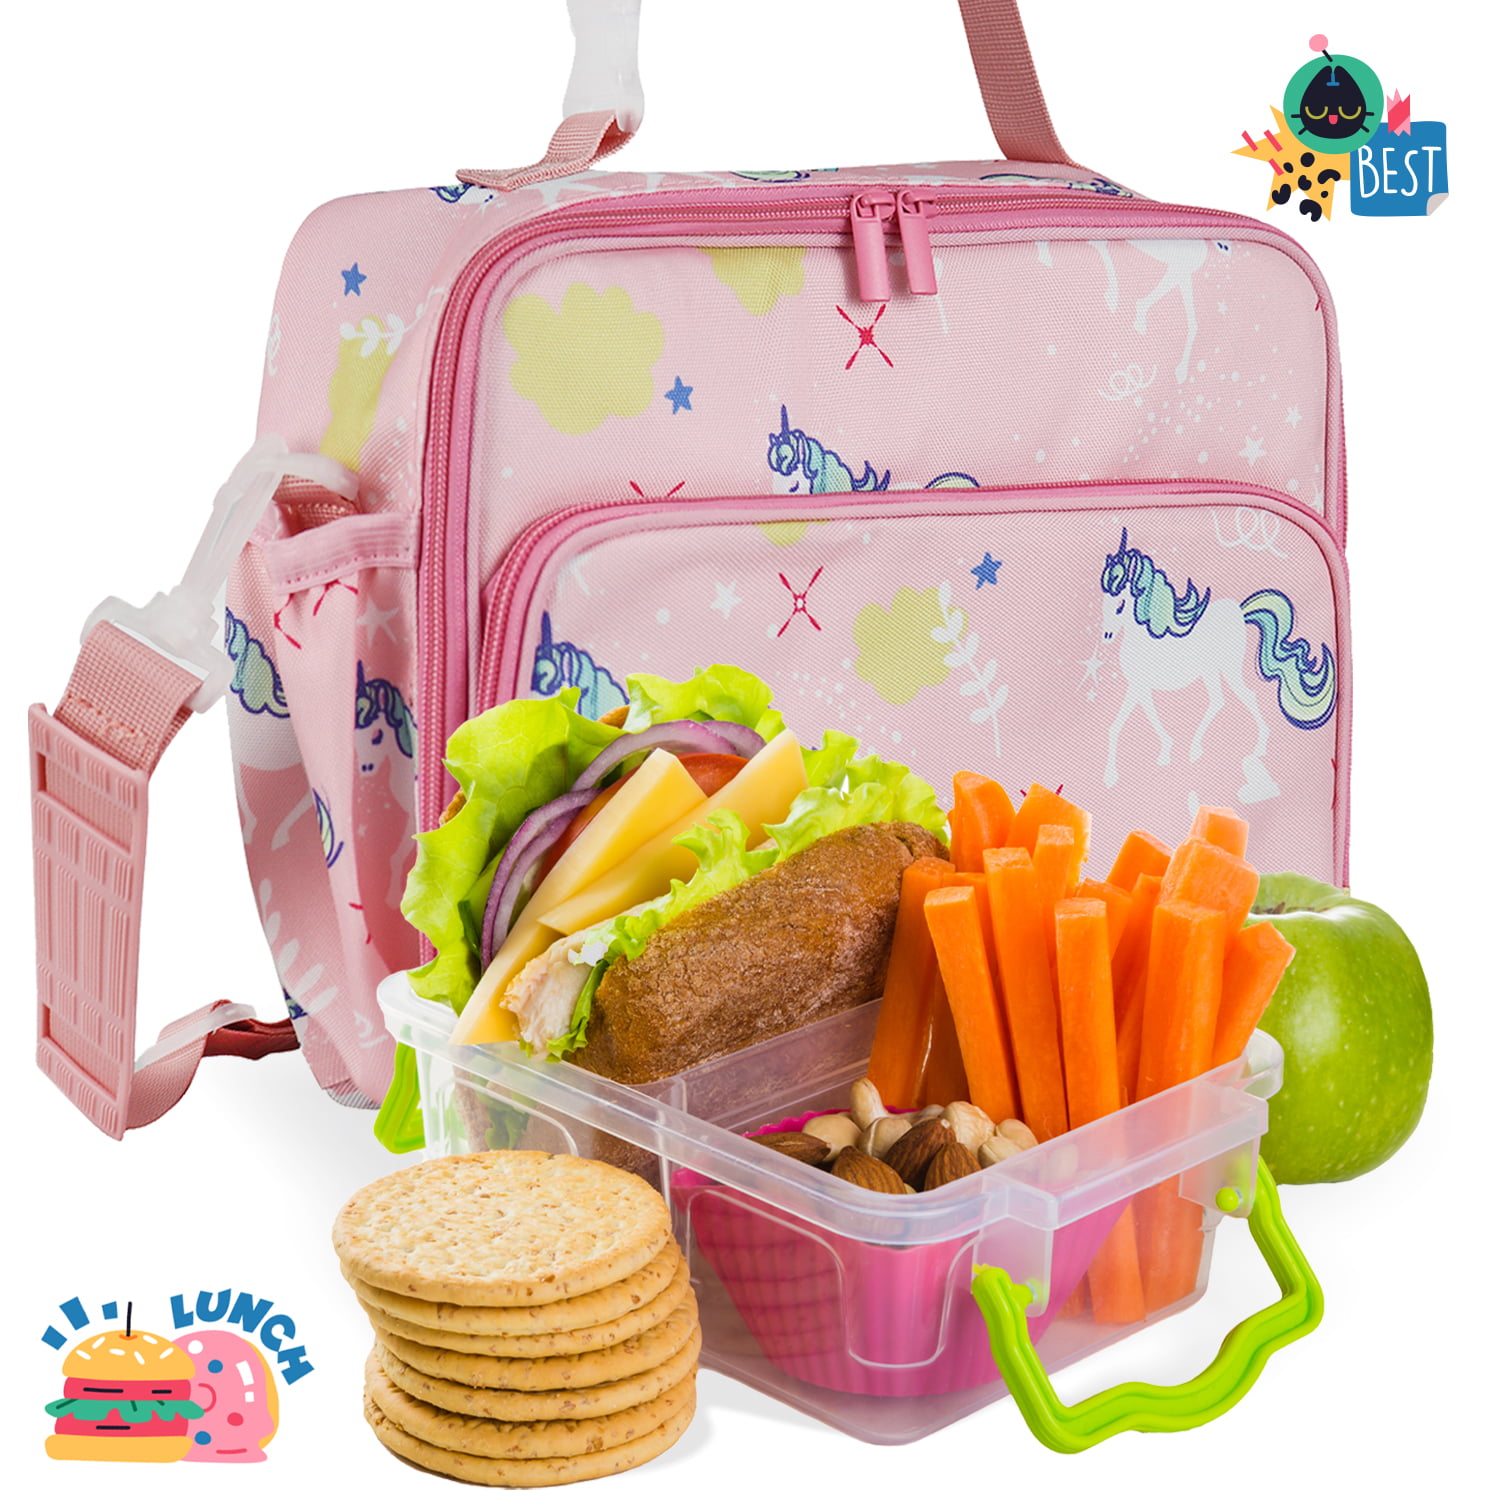 Lunchbox / Kids Lunchbox / Preschool Lunchbox / Monogram Lunchbox